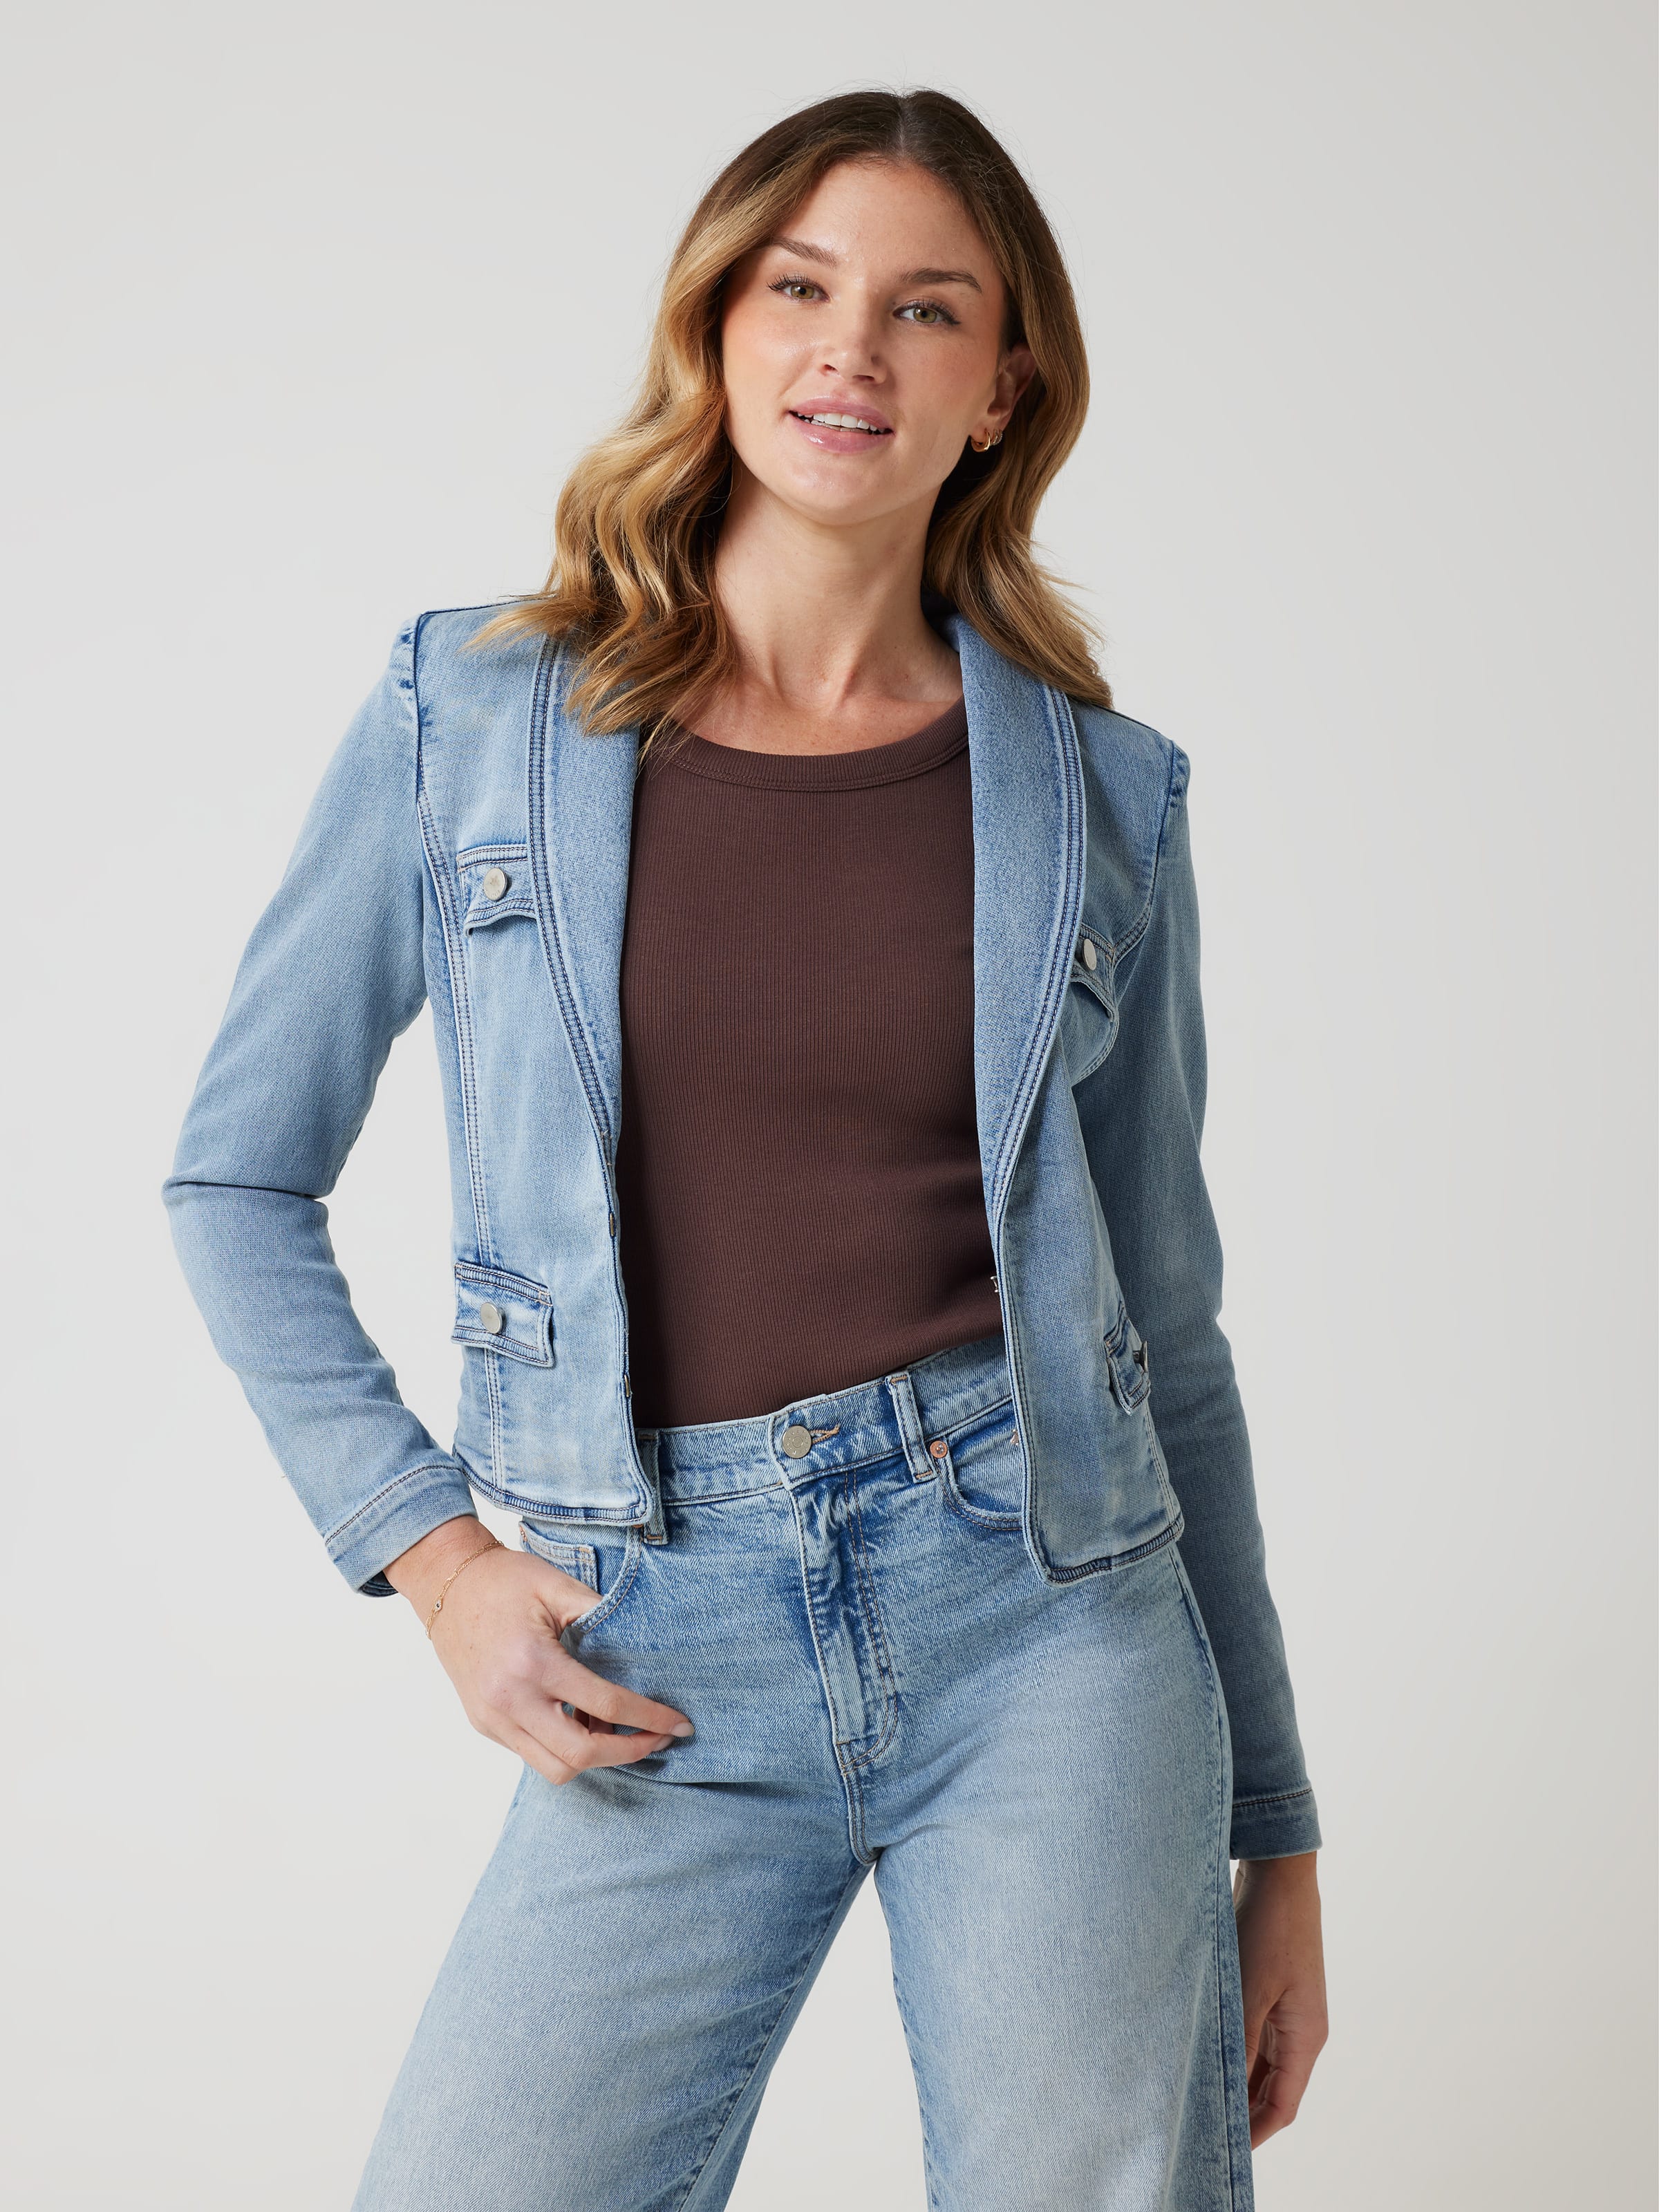 Women's Jackets, Coats & Blazers | Just Jeans